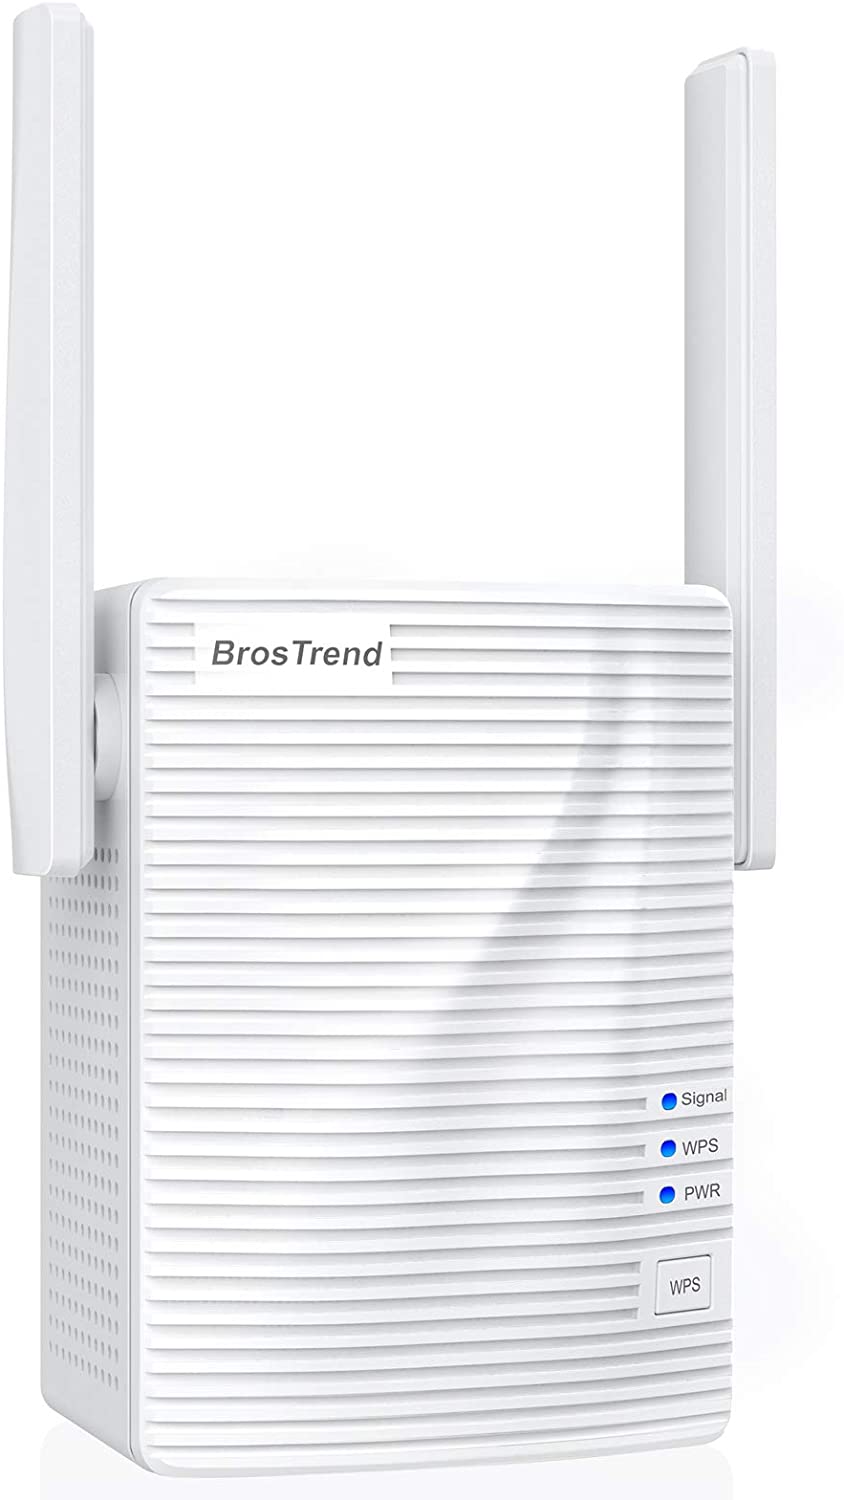 BrosTrend 1200Mbps Wi-Fi Extender